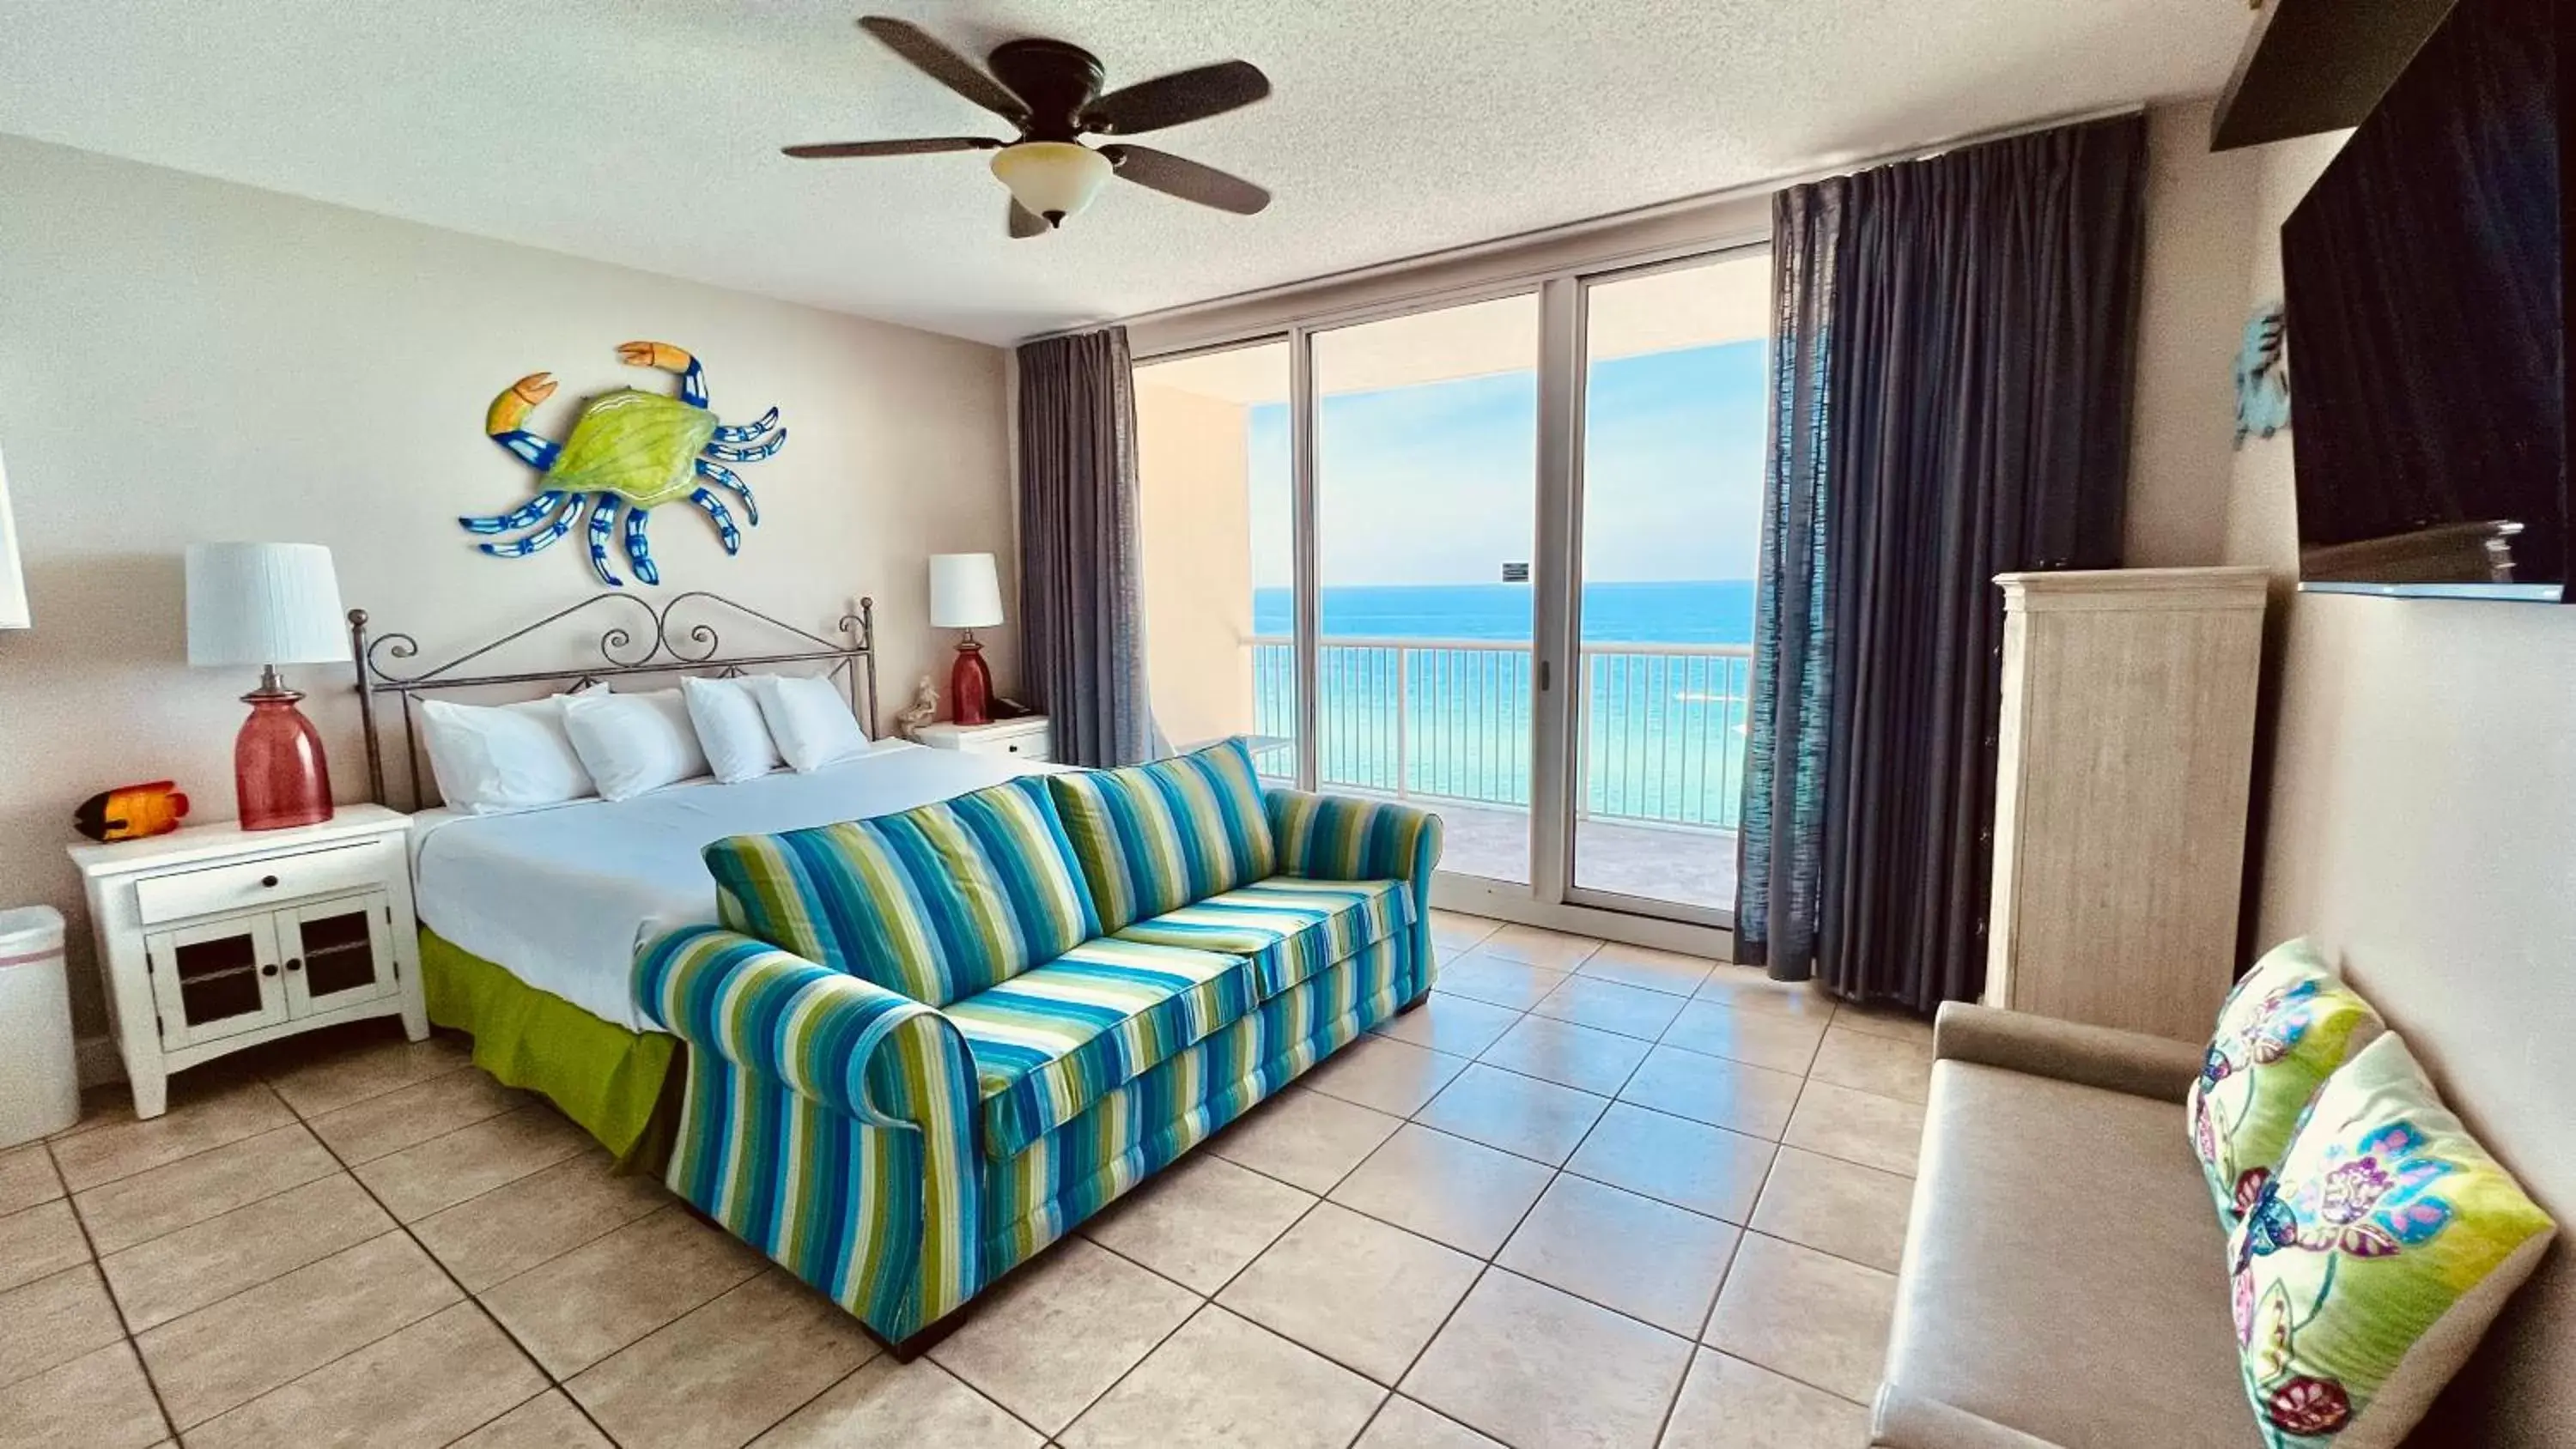 Bed, Seating Area in Majestic Beach Resort, Panama City Beach, Fl